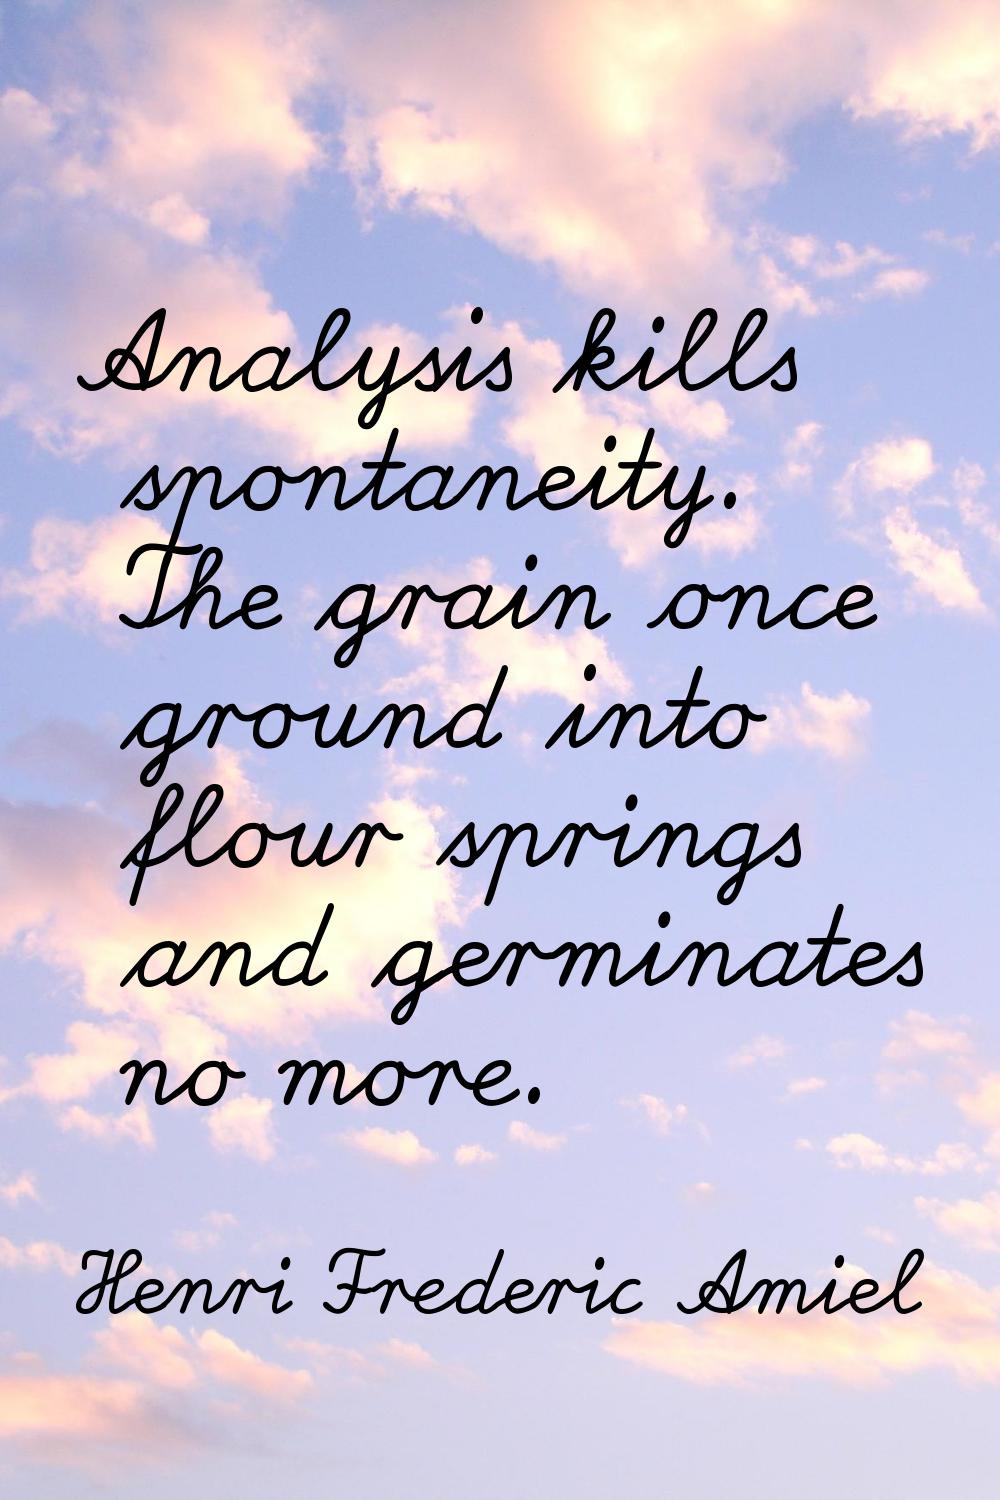 Analysis kills spontaneity. The grain once ground into flour springs and germinates no more.